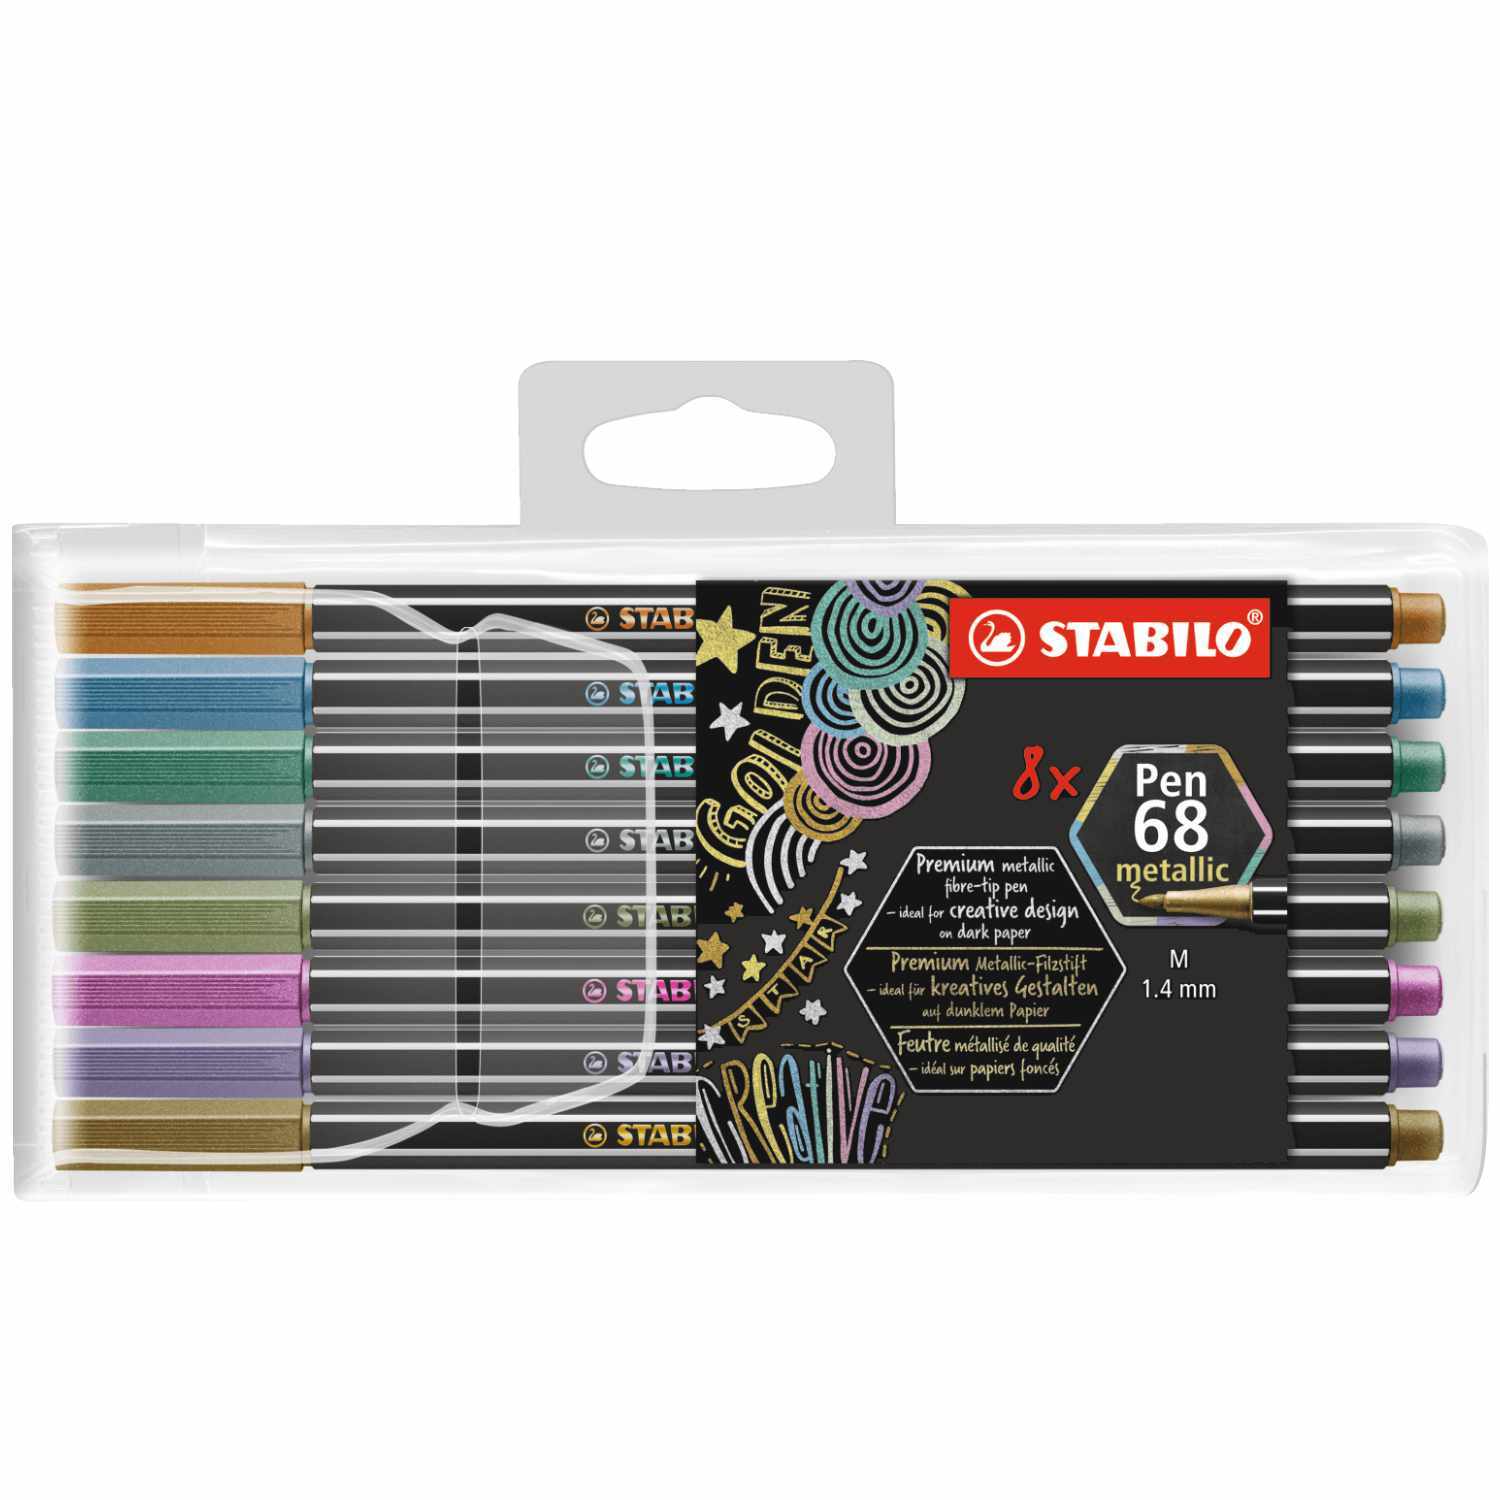 Pen 68 Metallic im Kunststoffetui 8 Farben